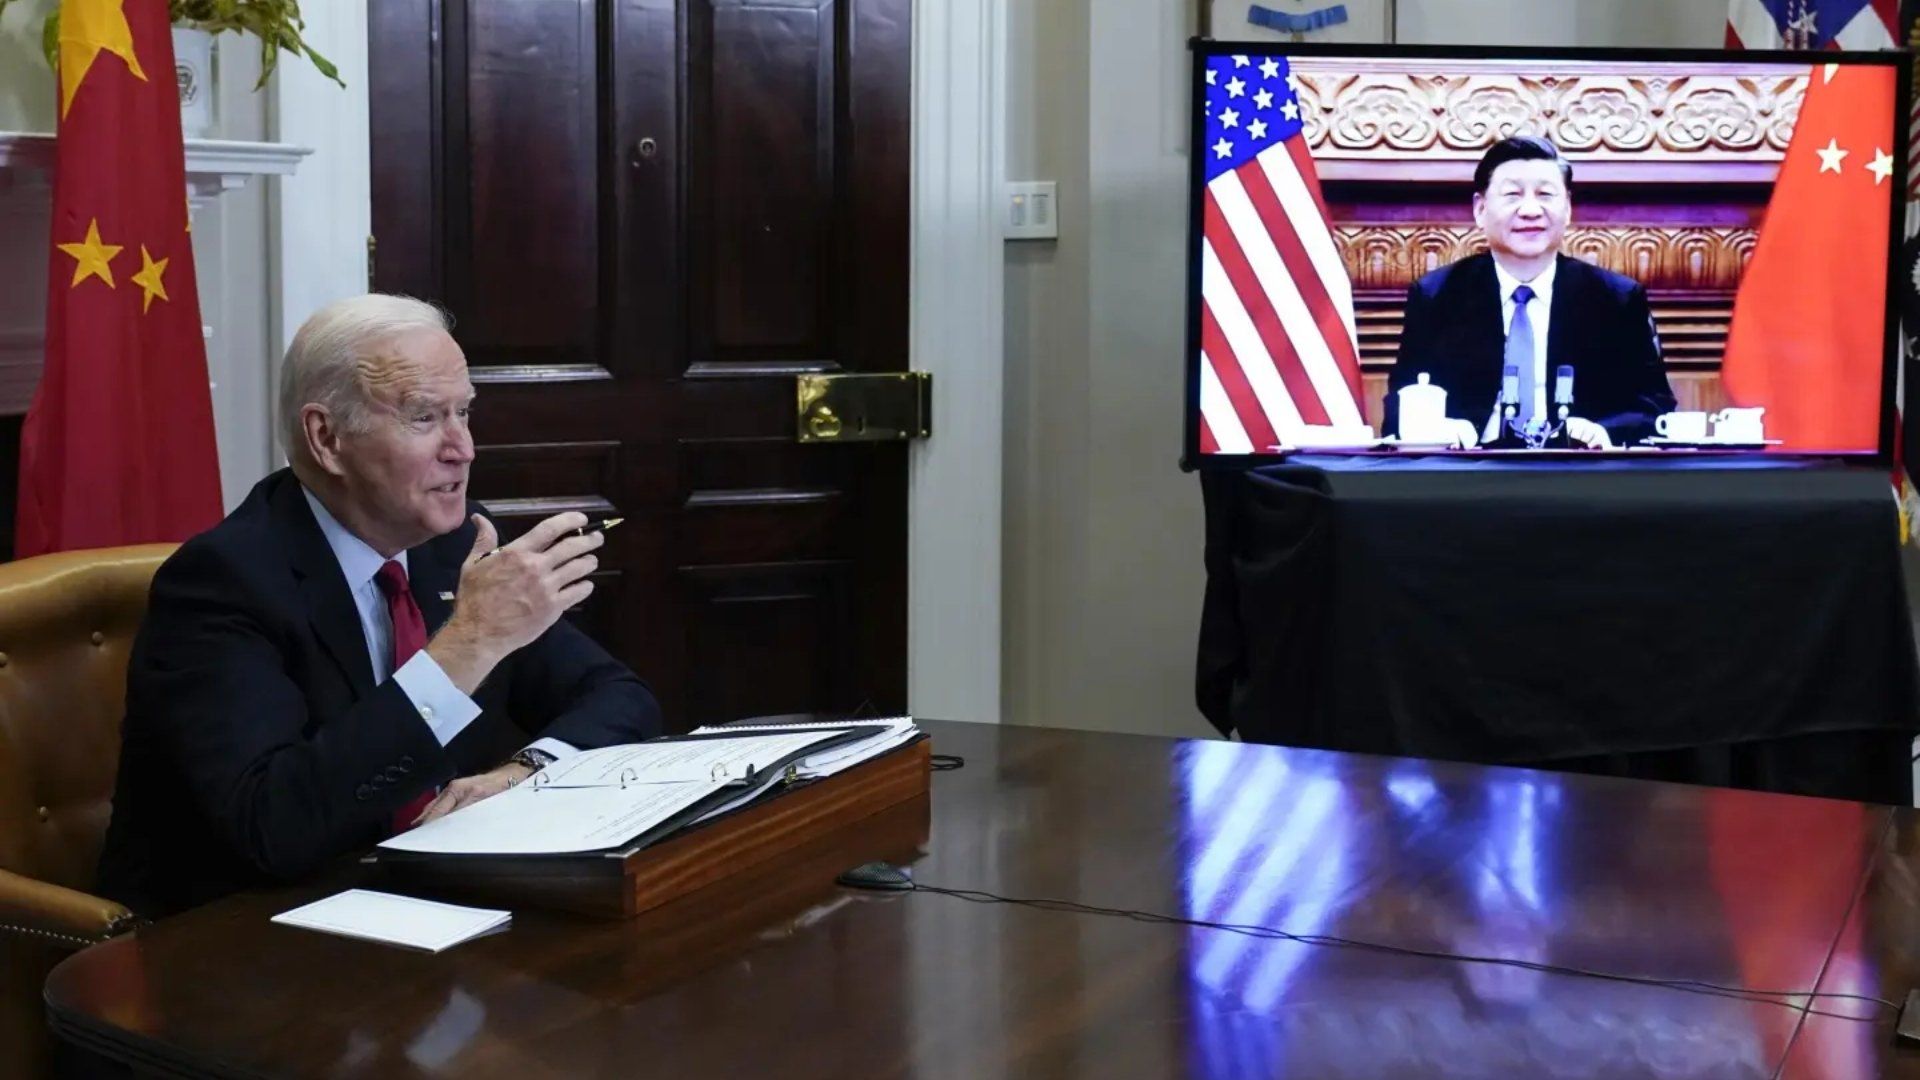 Charla telefónica del presidente Joe Biden y Xi Jinping de China. Foto: APCharla telefónica del presidente Joe Biden y Xi Jinping de China